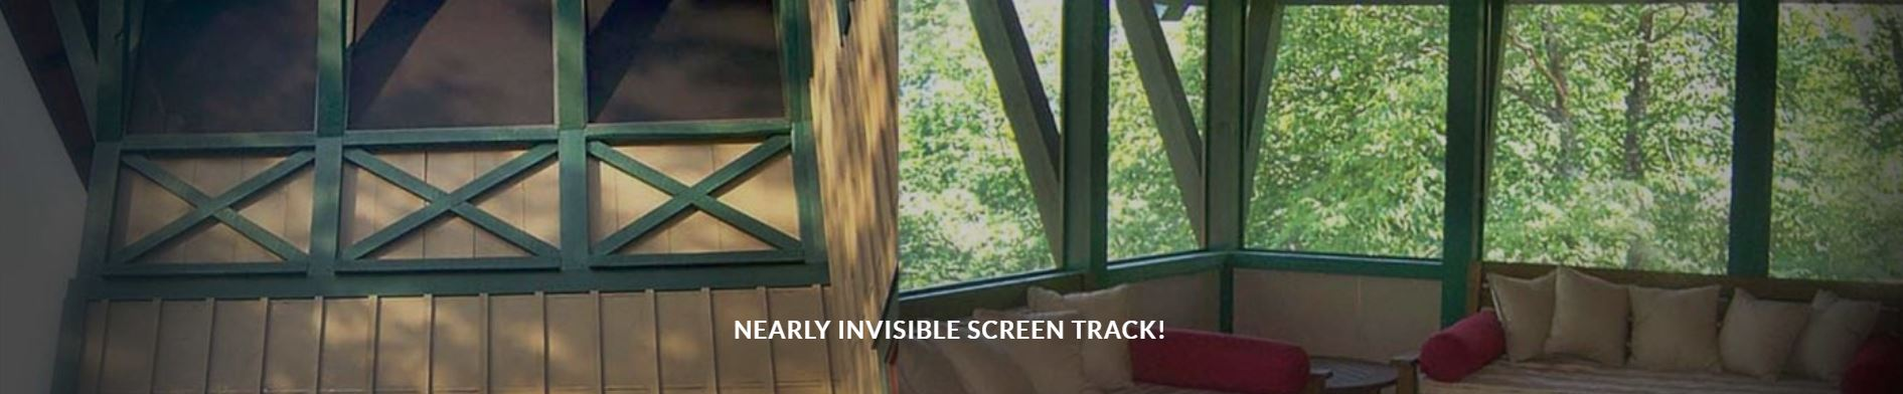 Screen Tight Mini Track Porch Screening System 